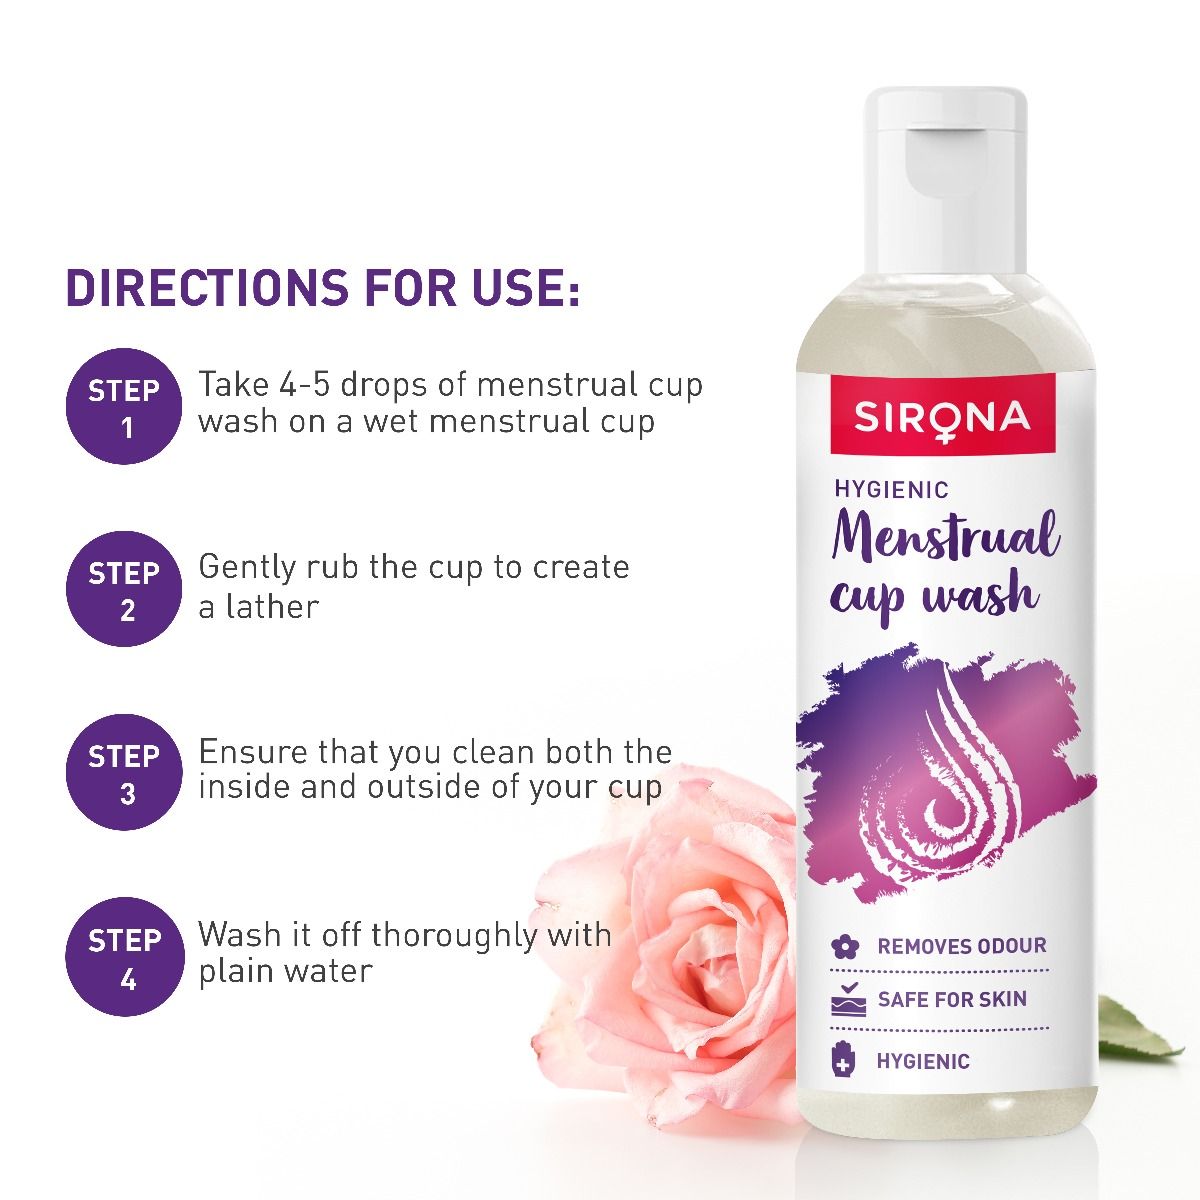 Sirona Hygienic Menstrual Cup Wash, 100 ml, Pack of 1 